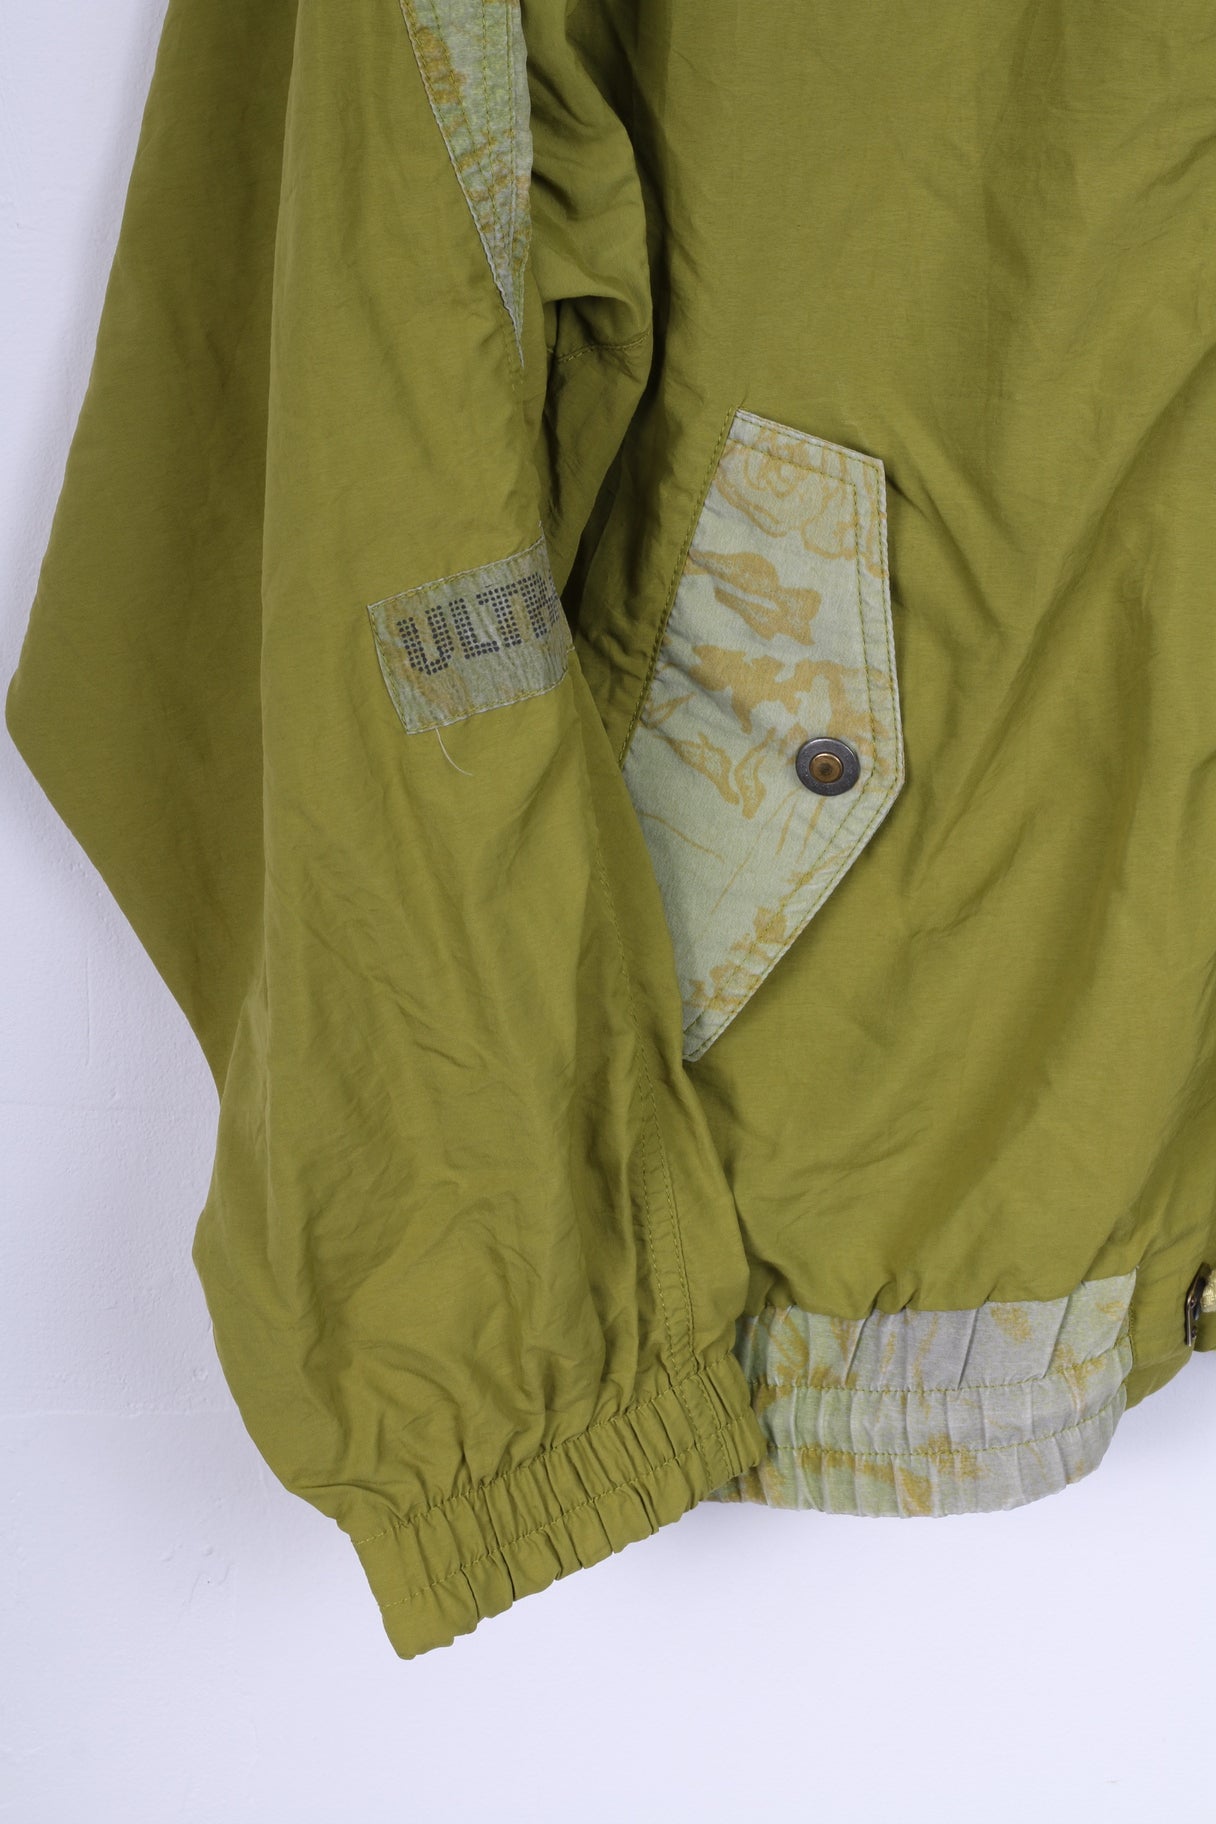 Etirel Mens XL Track Top Jacket Green Zippered Vintage Livestyle Lightweight Top